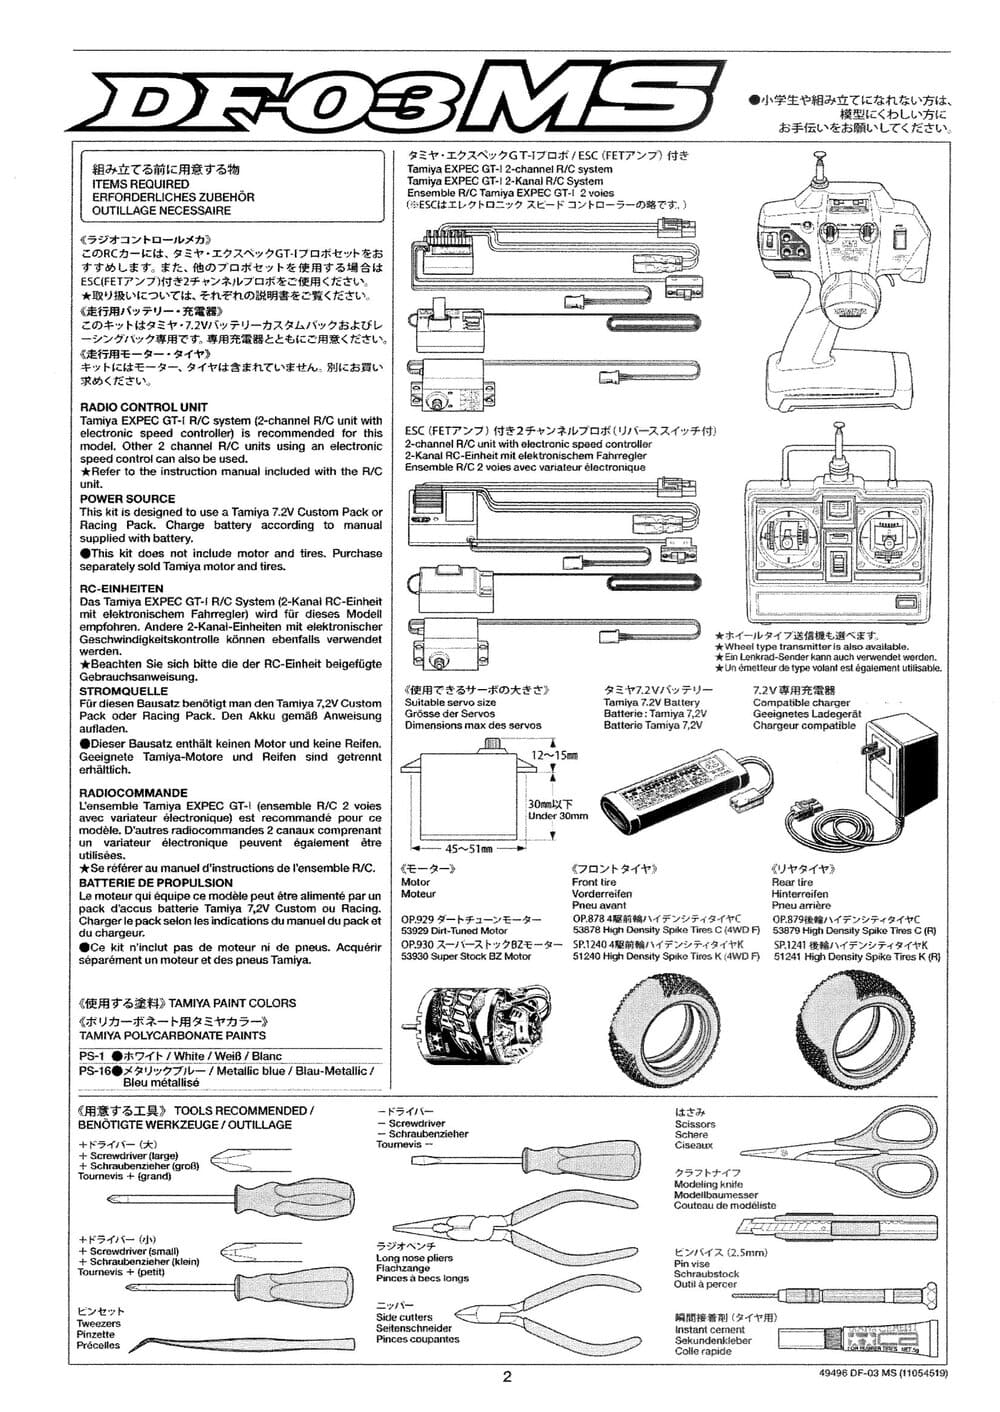 Tamiya - DF-03 MS Chassis Chassis - Manual - Page 2